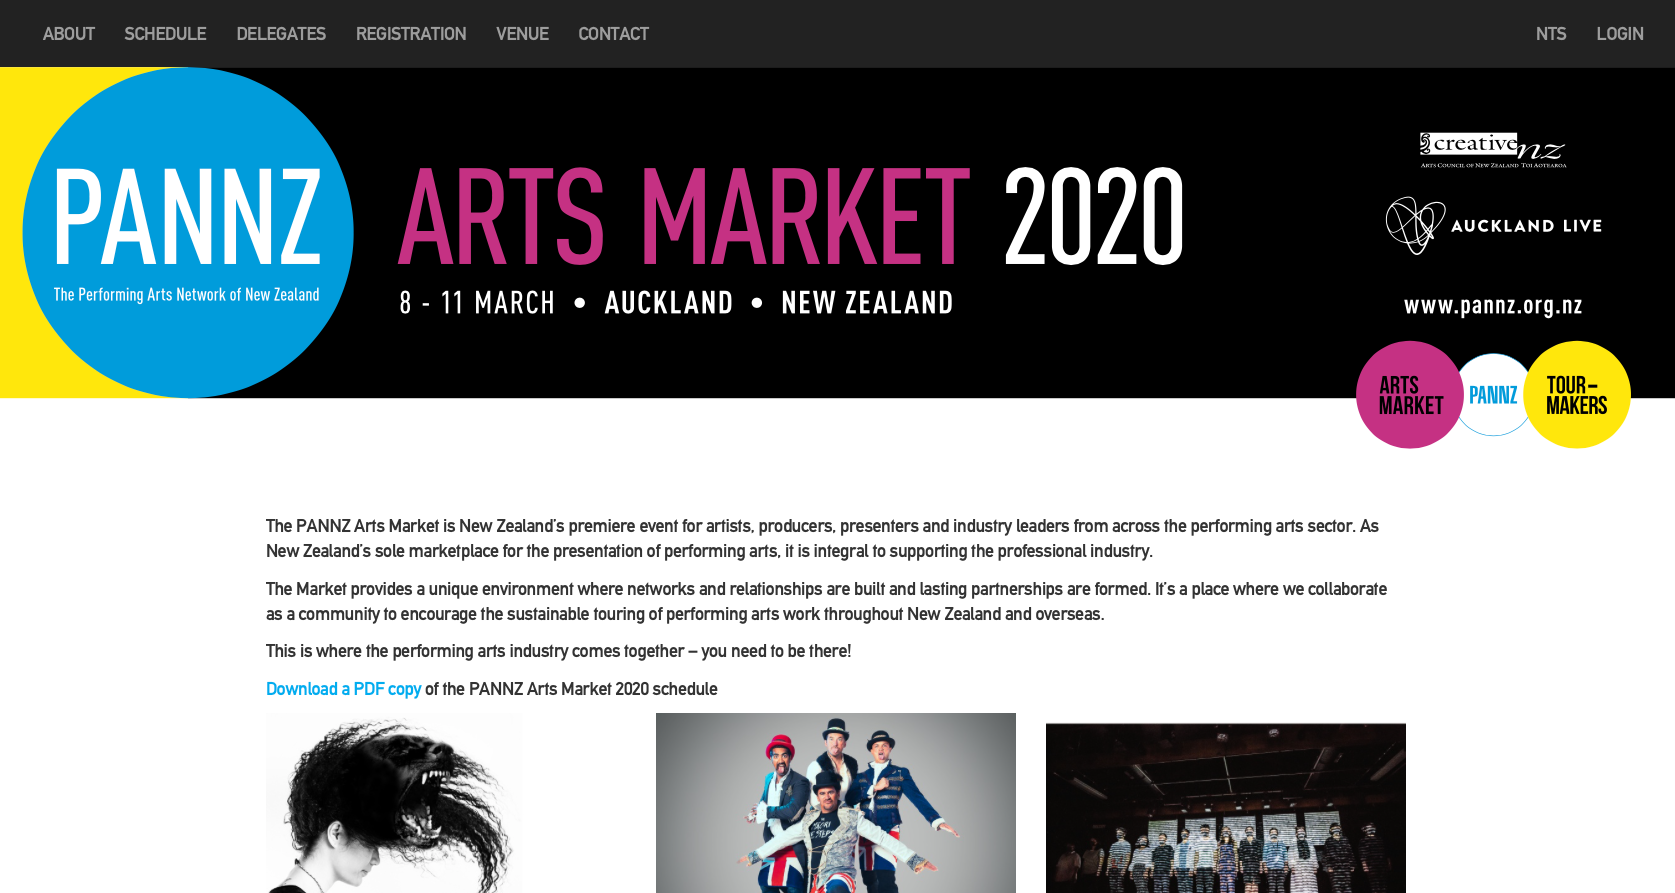 PANNZ Arts Market 2020